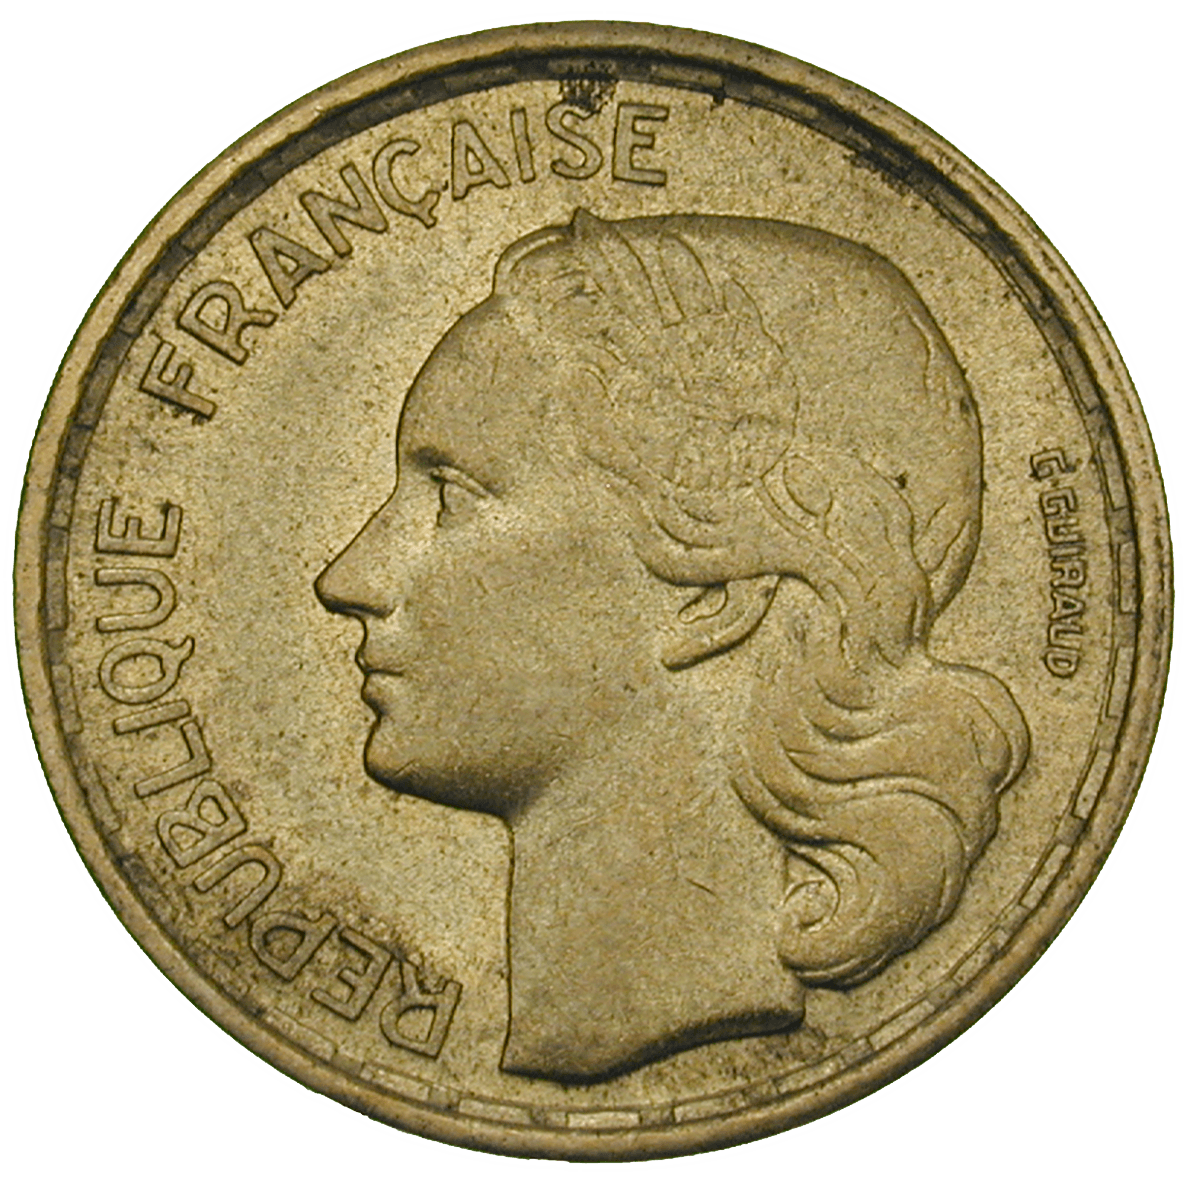 Republik Frankreich, 10 Francs 1952 (obverse)